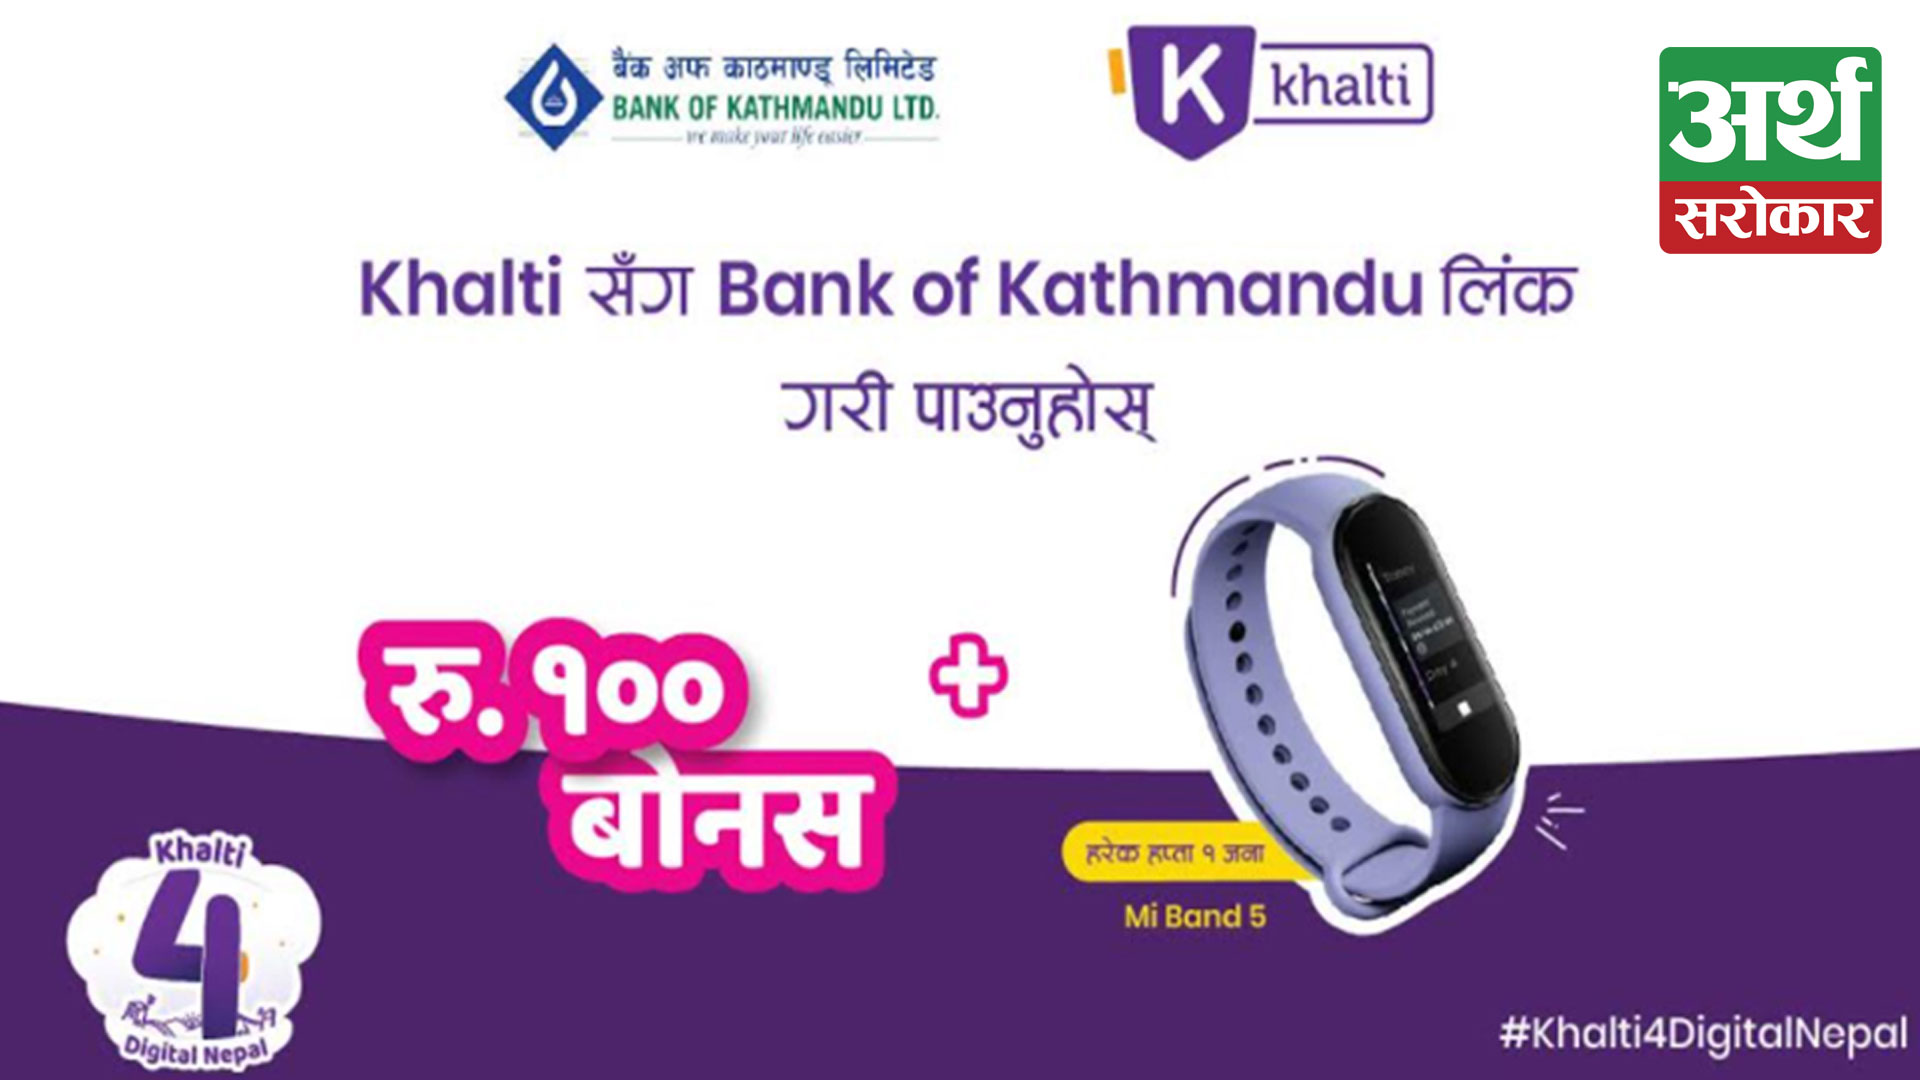 Bank of Kathmandu is providing Rs 100 bonus on linking account with Khalti Digital Wallet